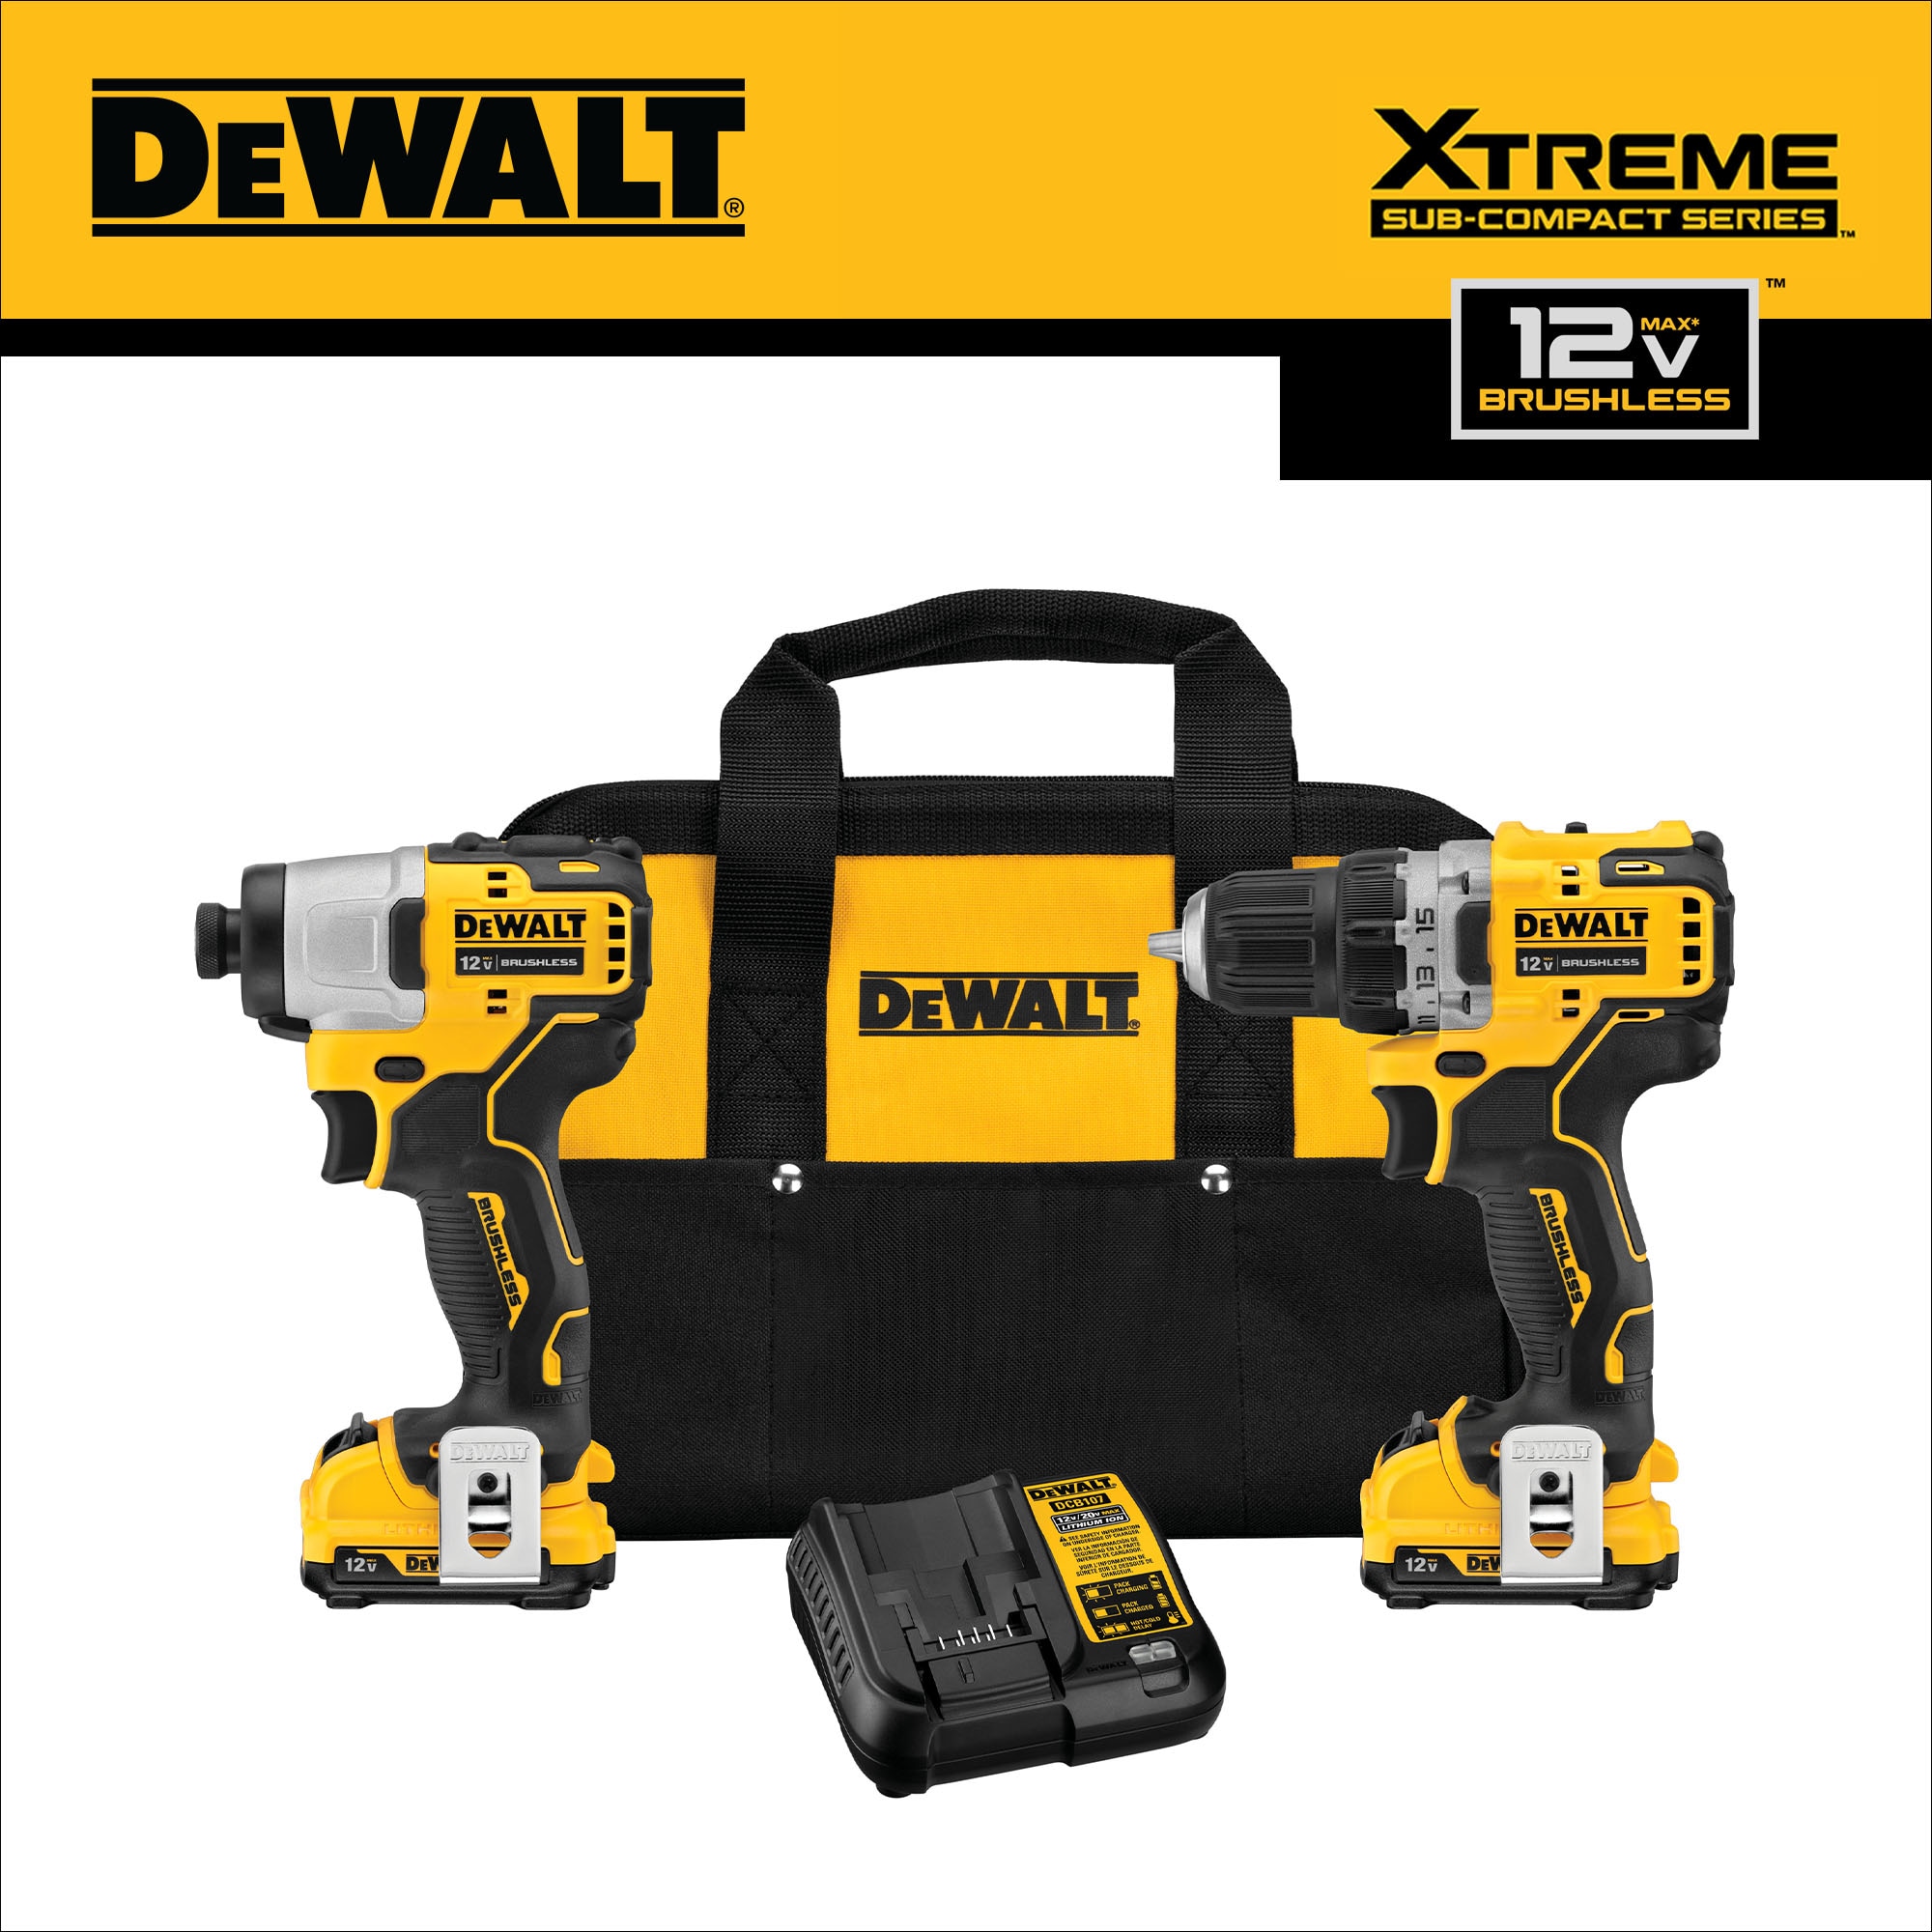 Dewalt Xtreme 12v Max* Cordless Drill Driver Kit 3/8-inch